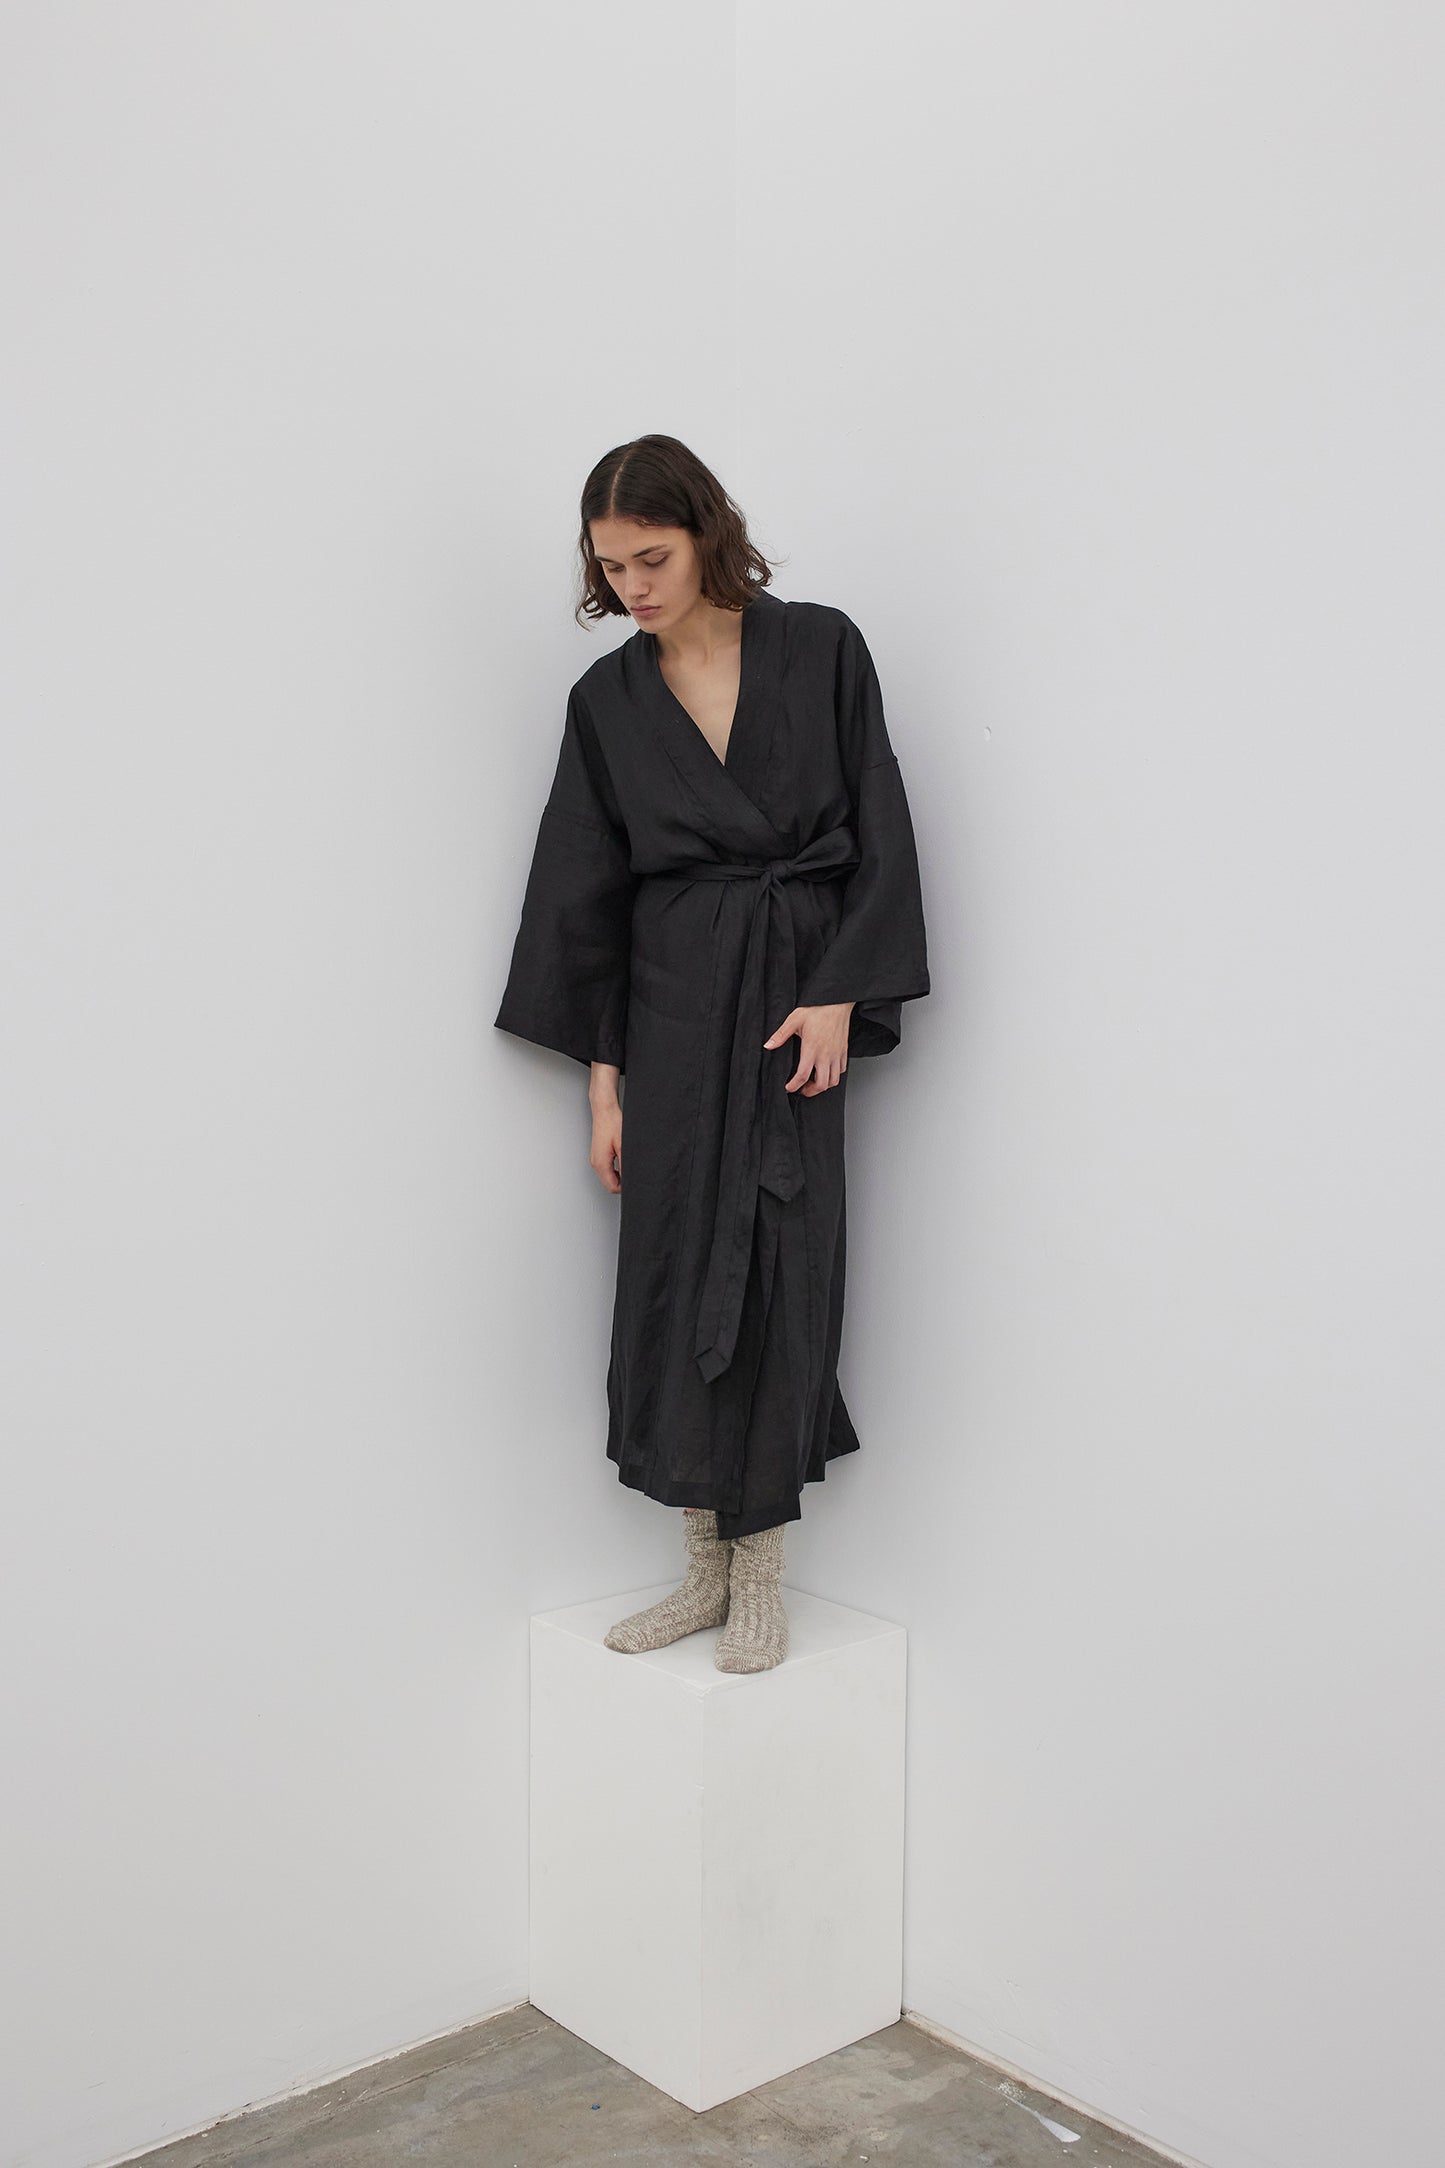 Female model wearing the 02 robe - deep black by Deiji Studios against plain background